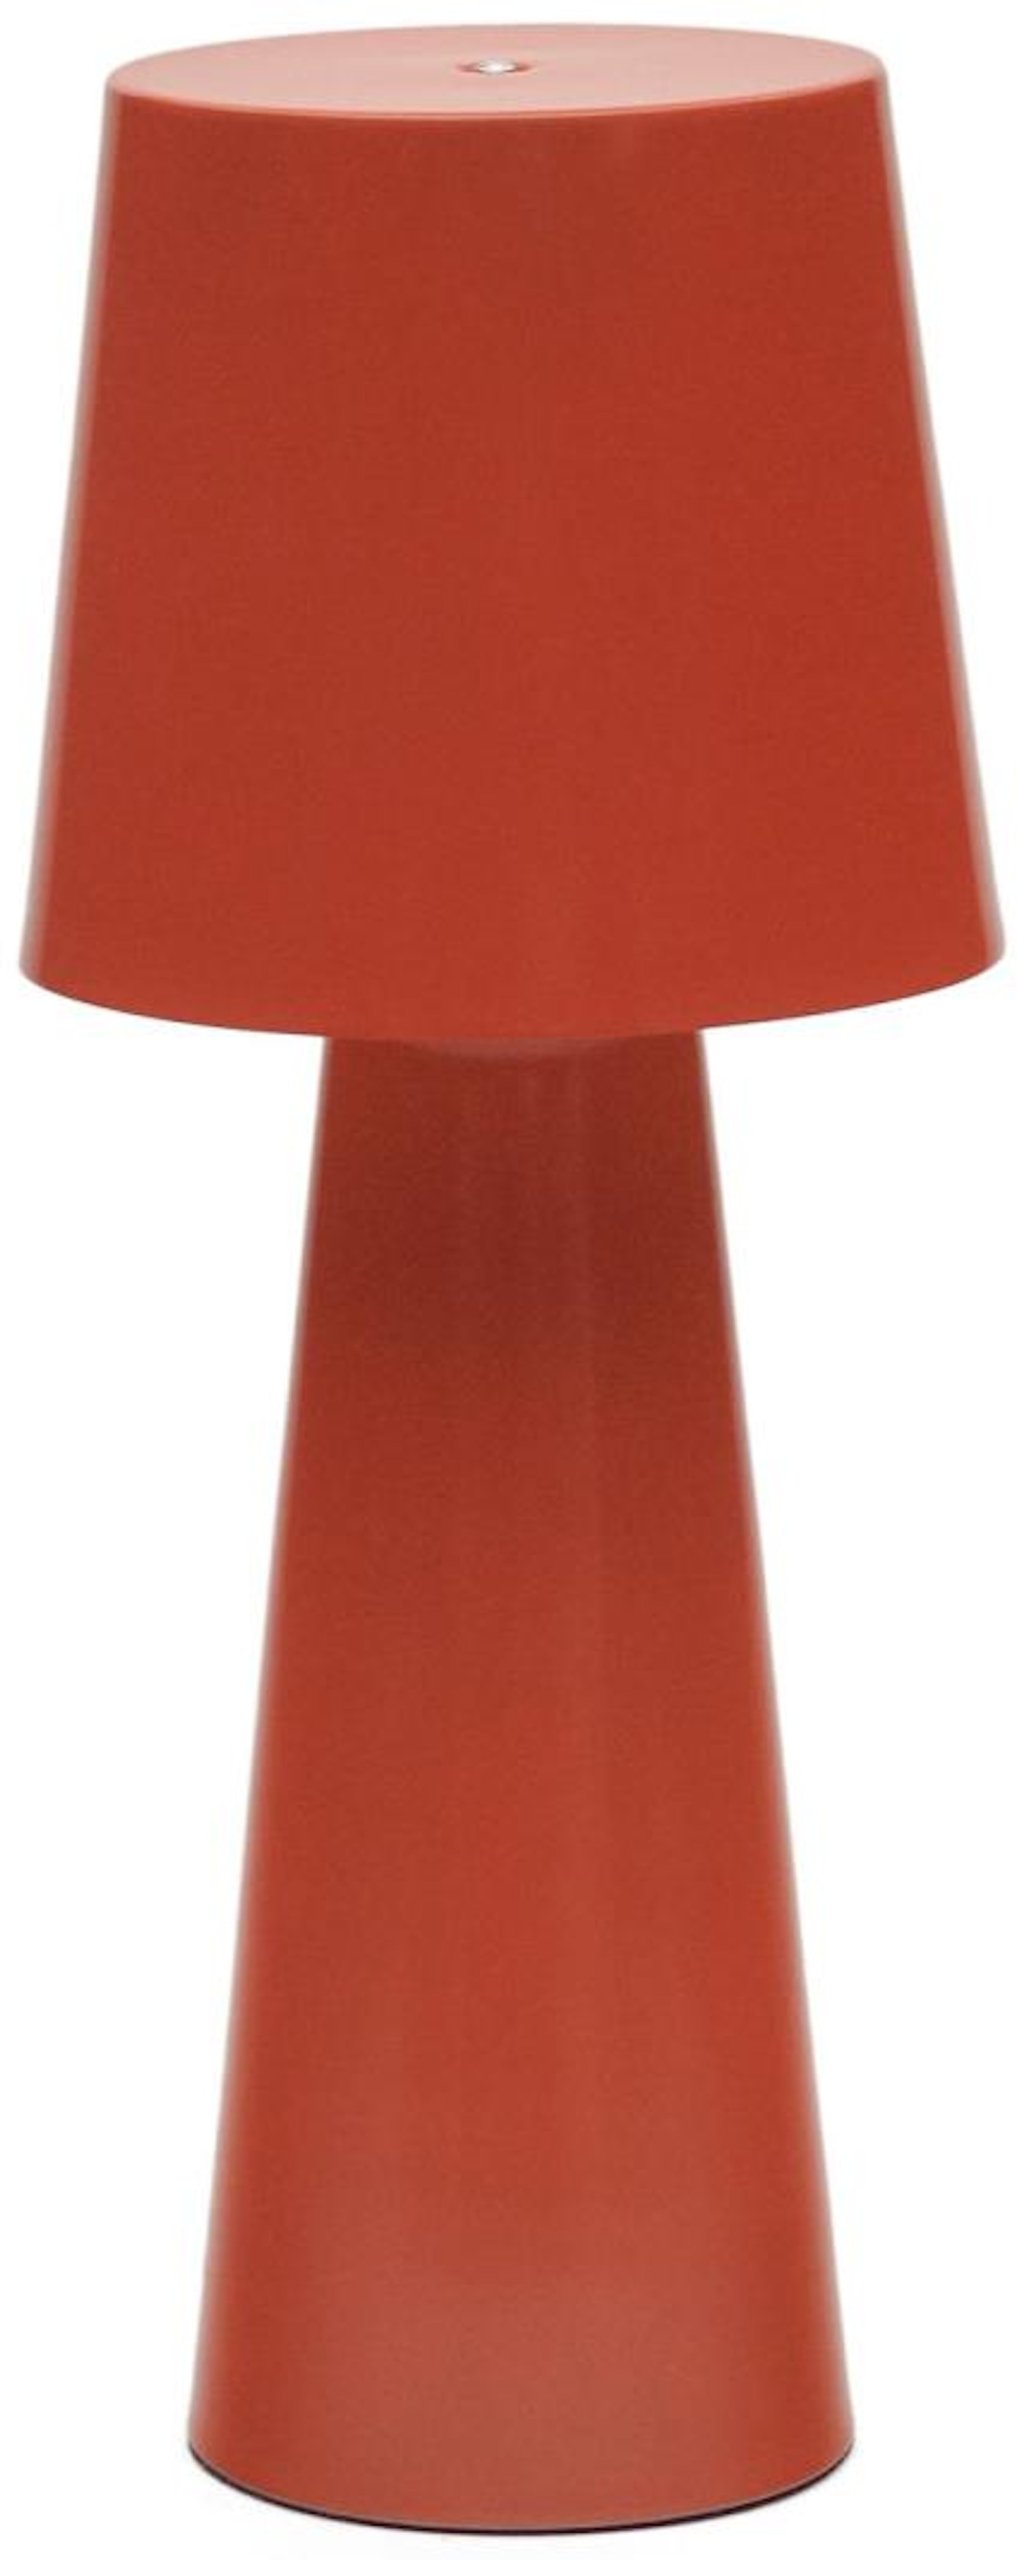 LAFORMA Arenys stor bordlampe med rødmalet finish